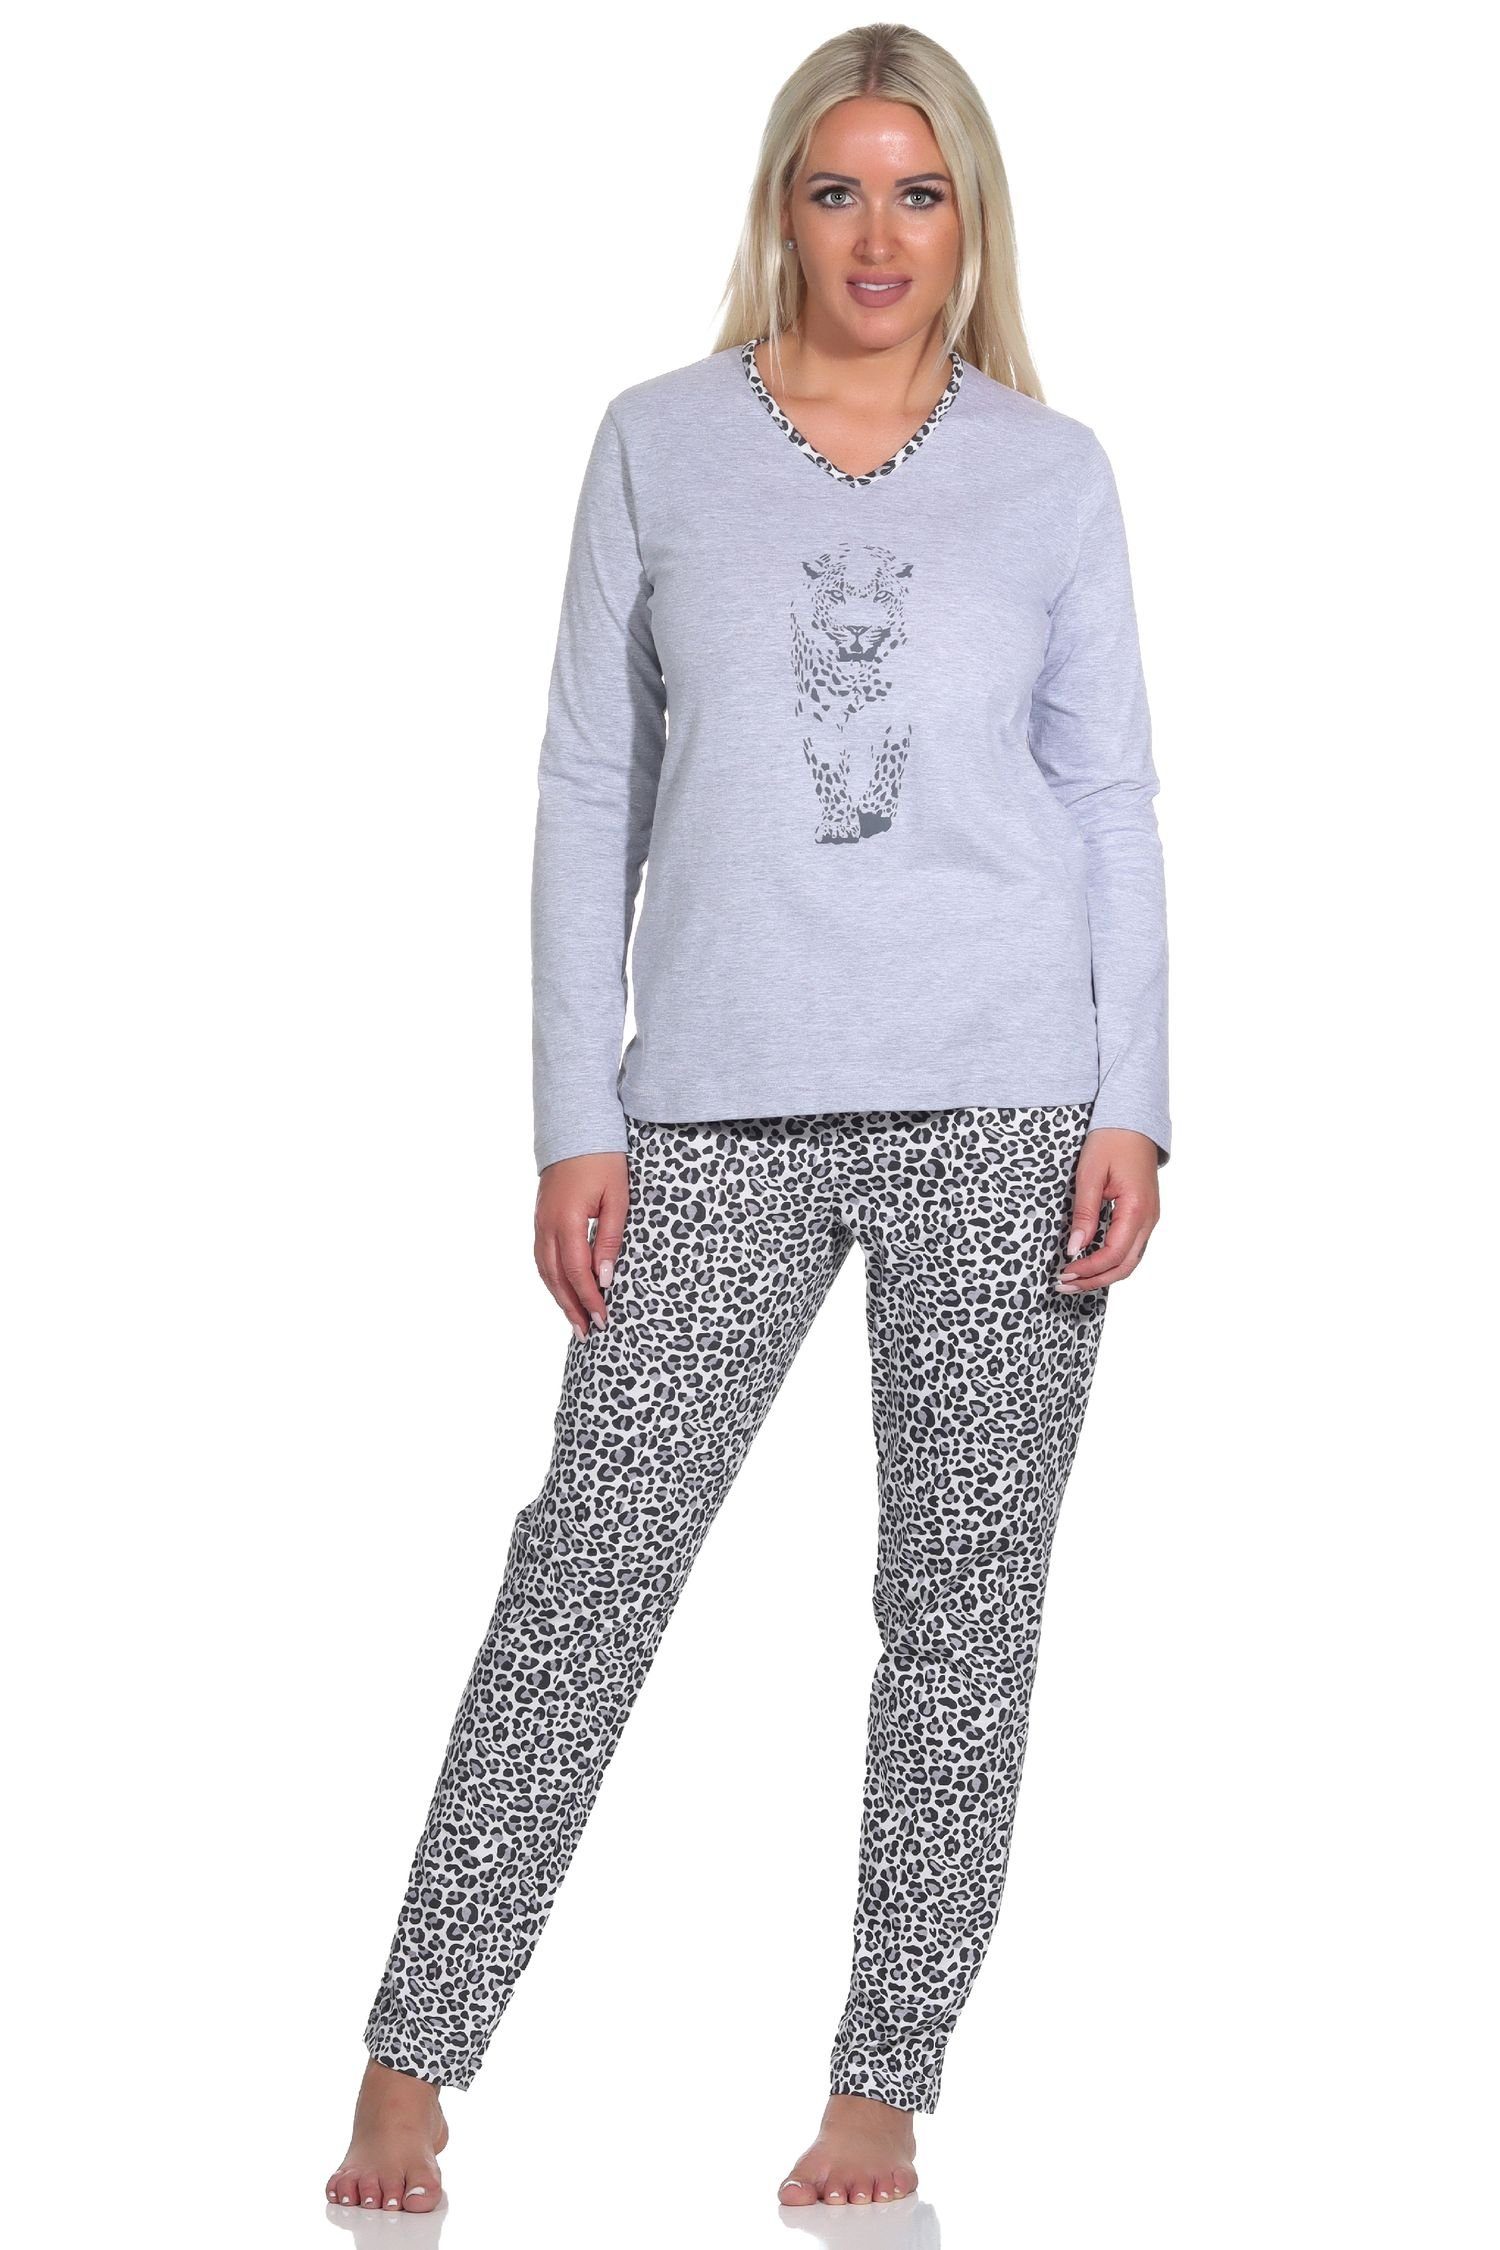 Animal-Print-Look grau-mel. Schlafanzug mit Tiermotiv, Normann Langarm Damen Pyjama Hose im